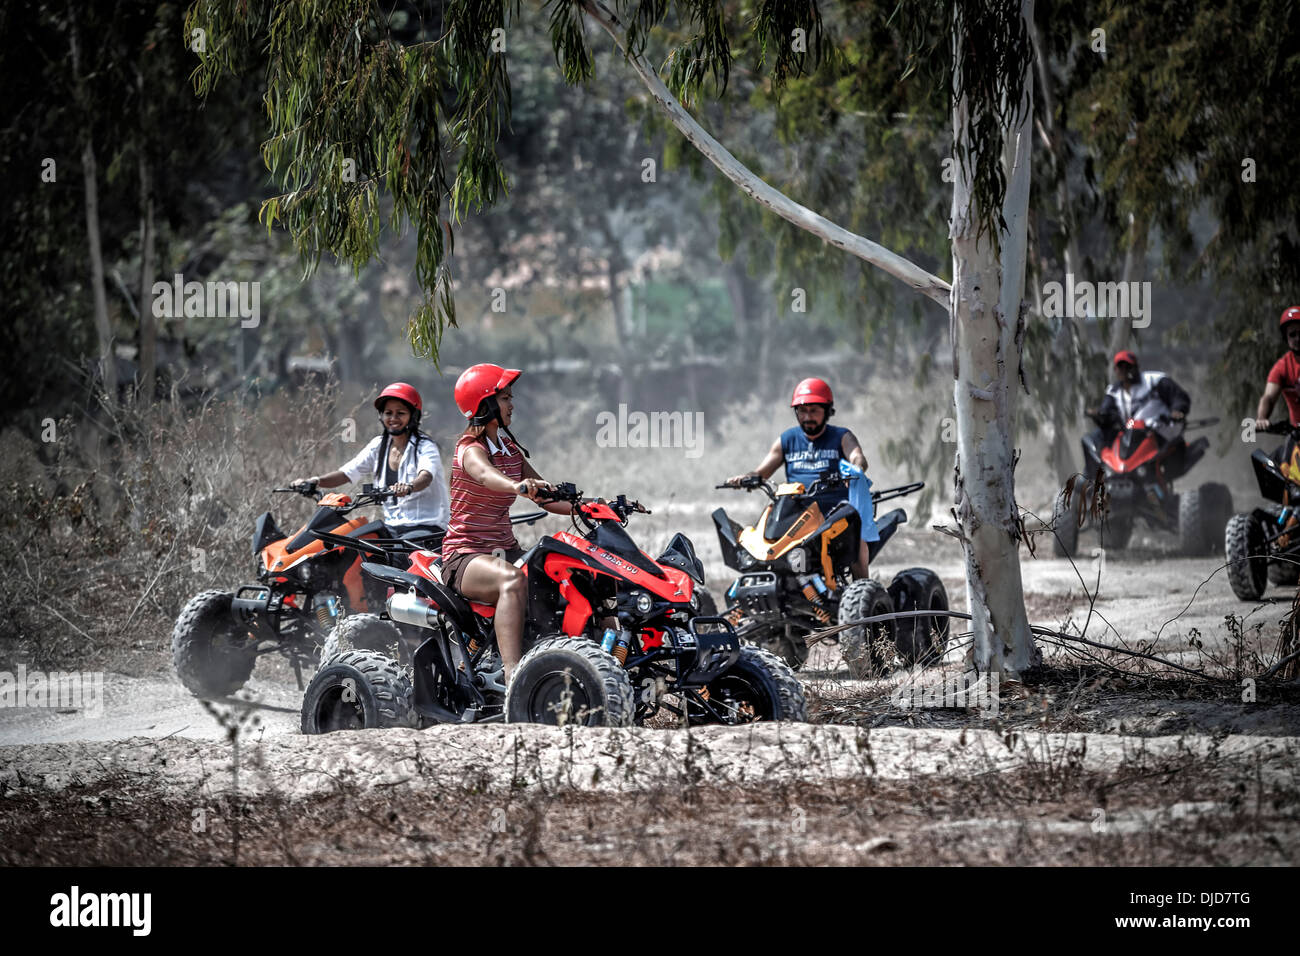 Mixed group of ATV quad bike  riders. Thailand S. E. Asia Stock Photo